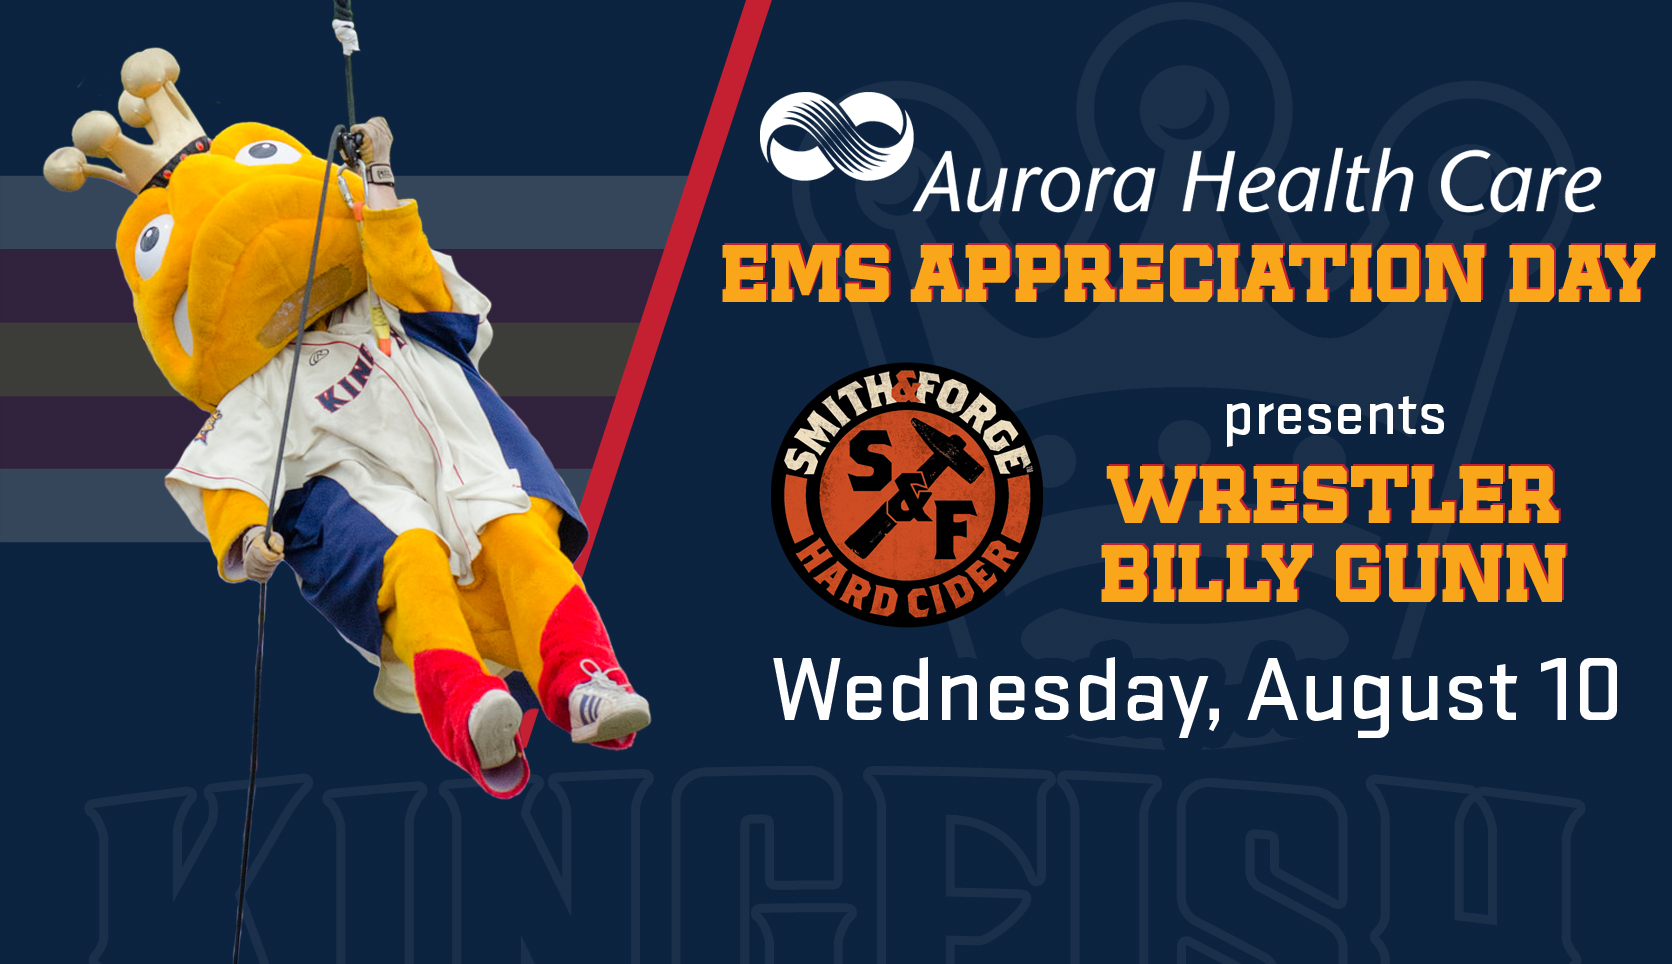 Aurora Health Care EMS Appreciation Day, Smith & Forge Presents Wrestler Billy Gunn ...